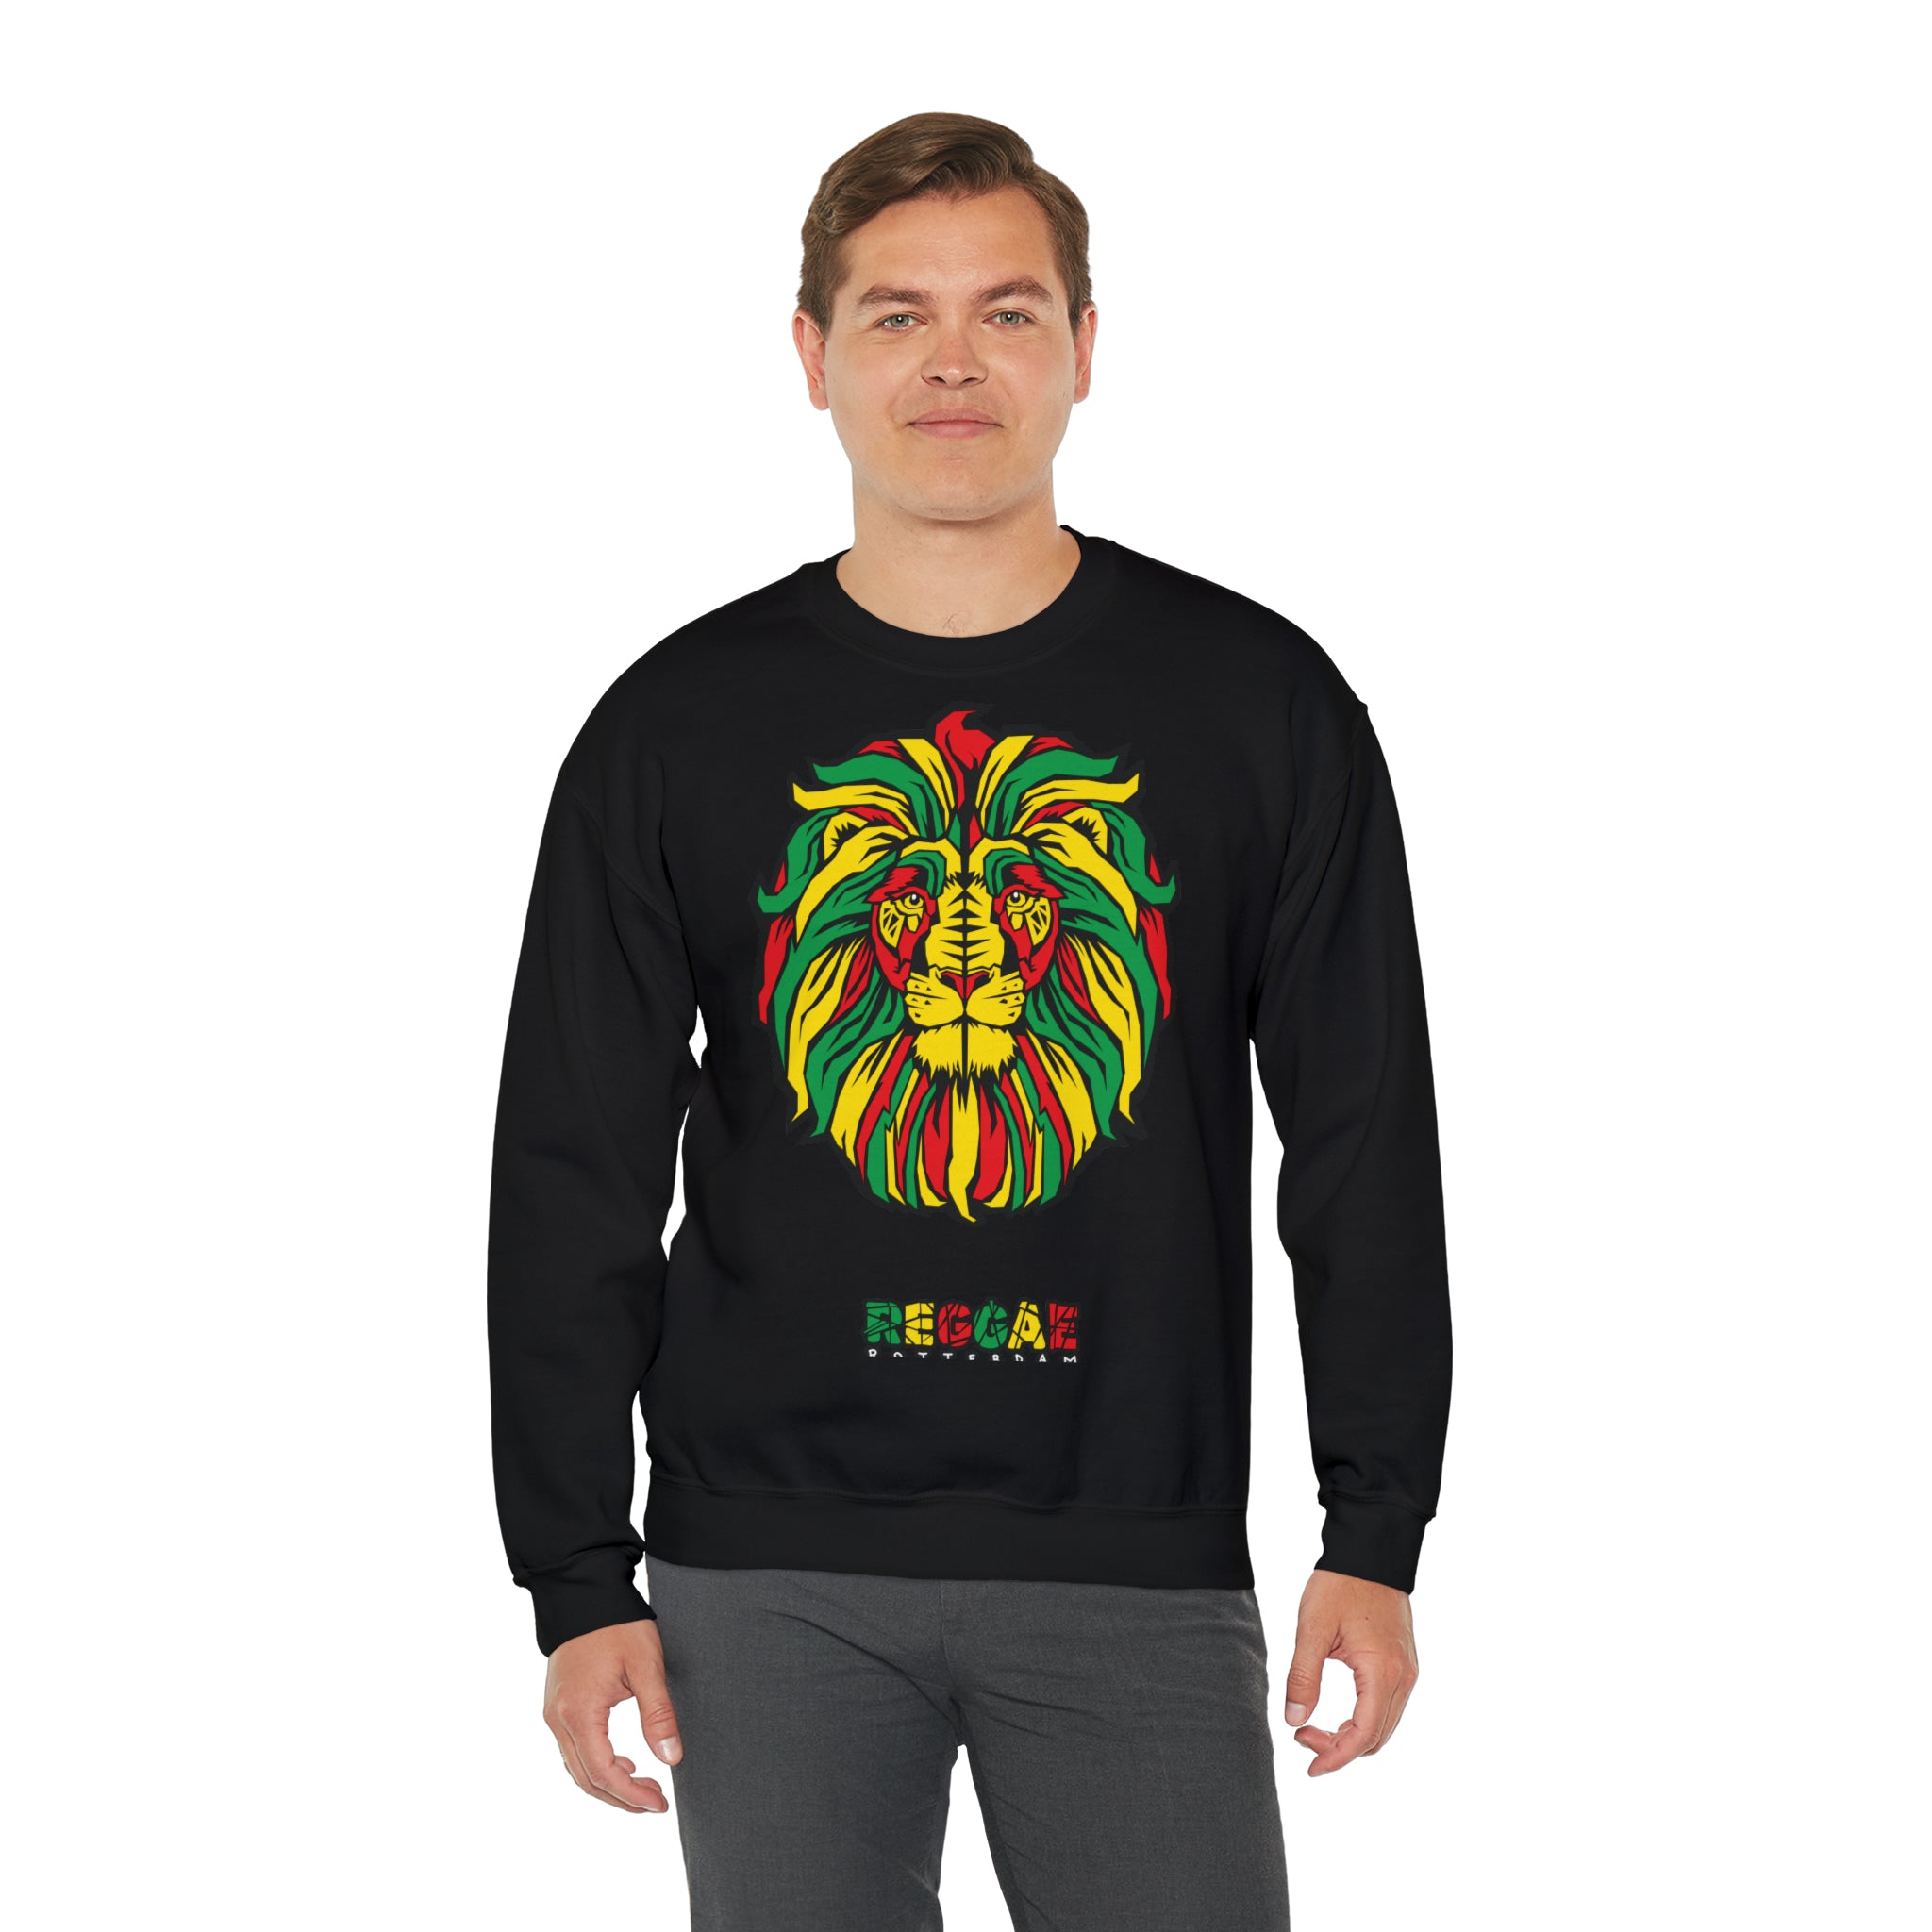 Reggae "Iron Lion" Crewneck Sweatshirt